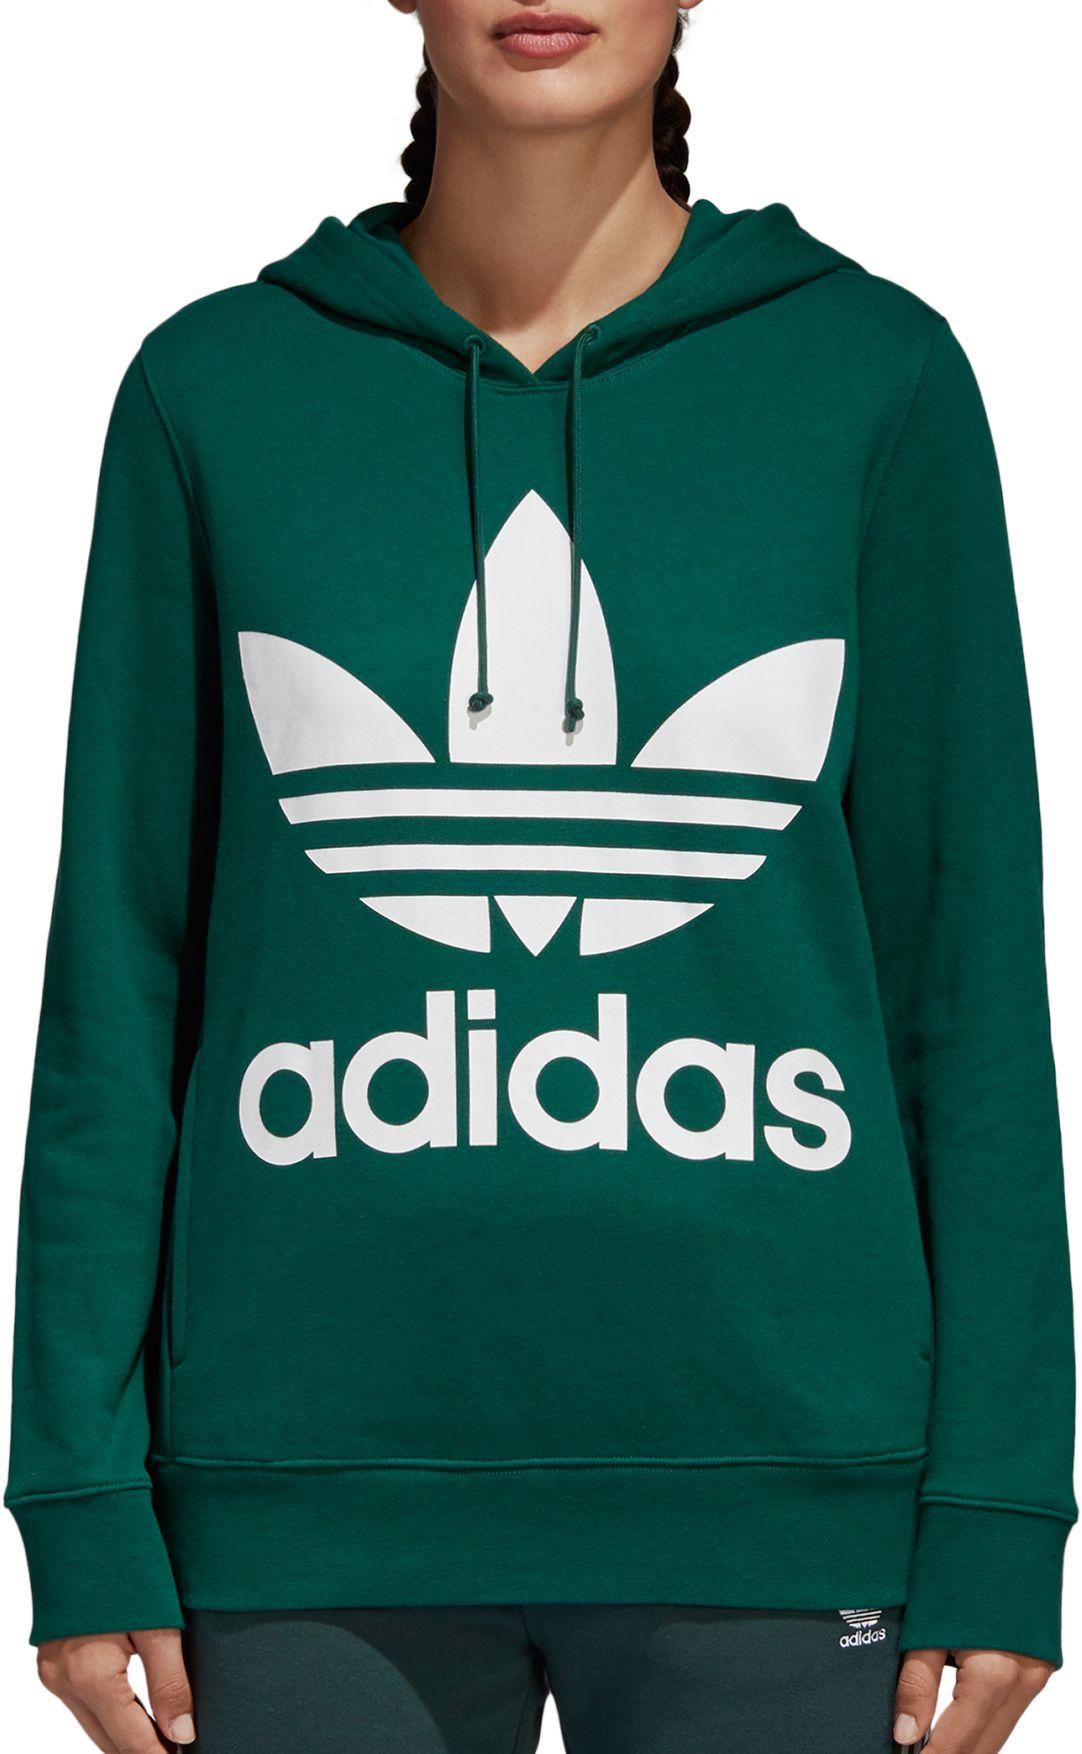 Adidas Originals Trefoil Hoodie In Green - Lyst-8844